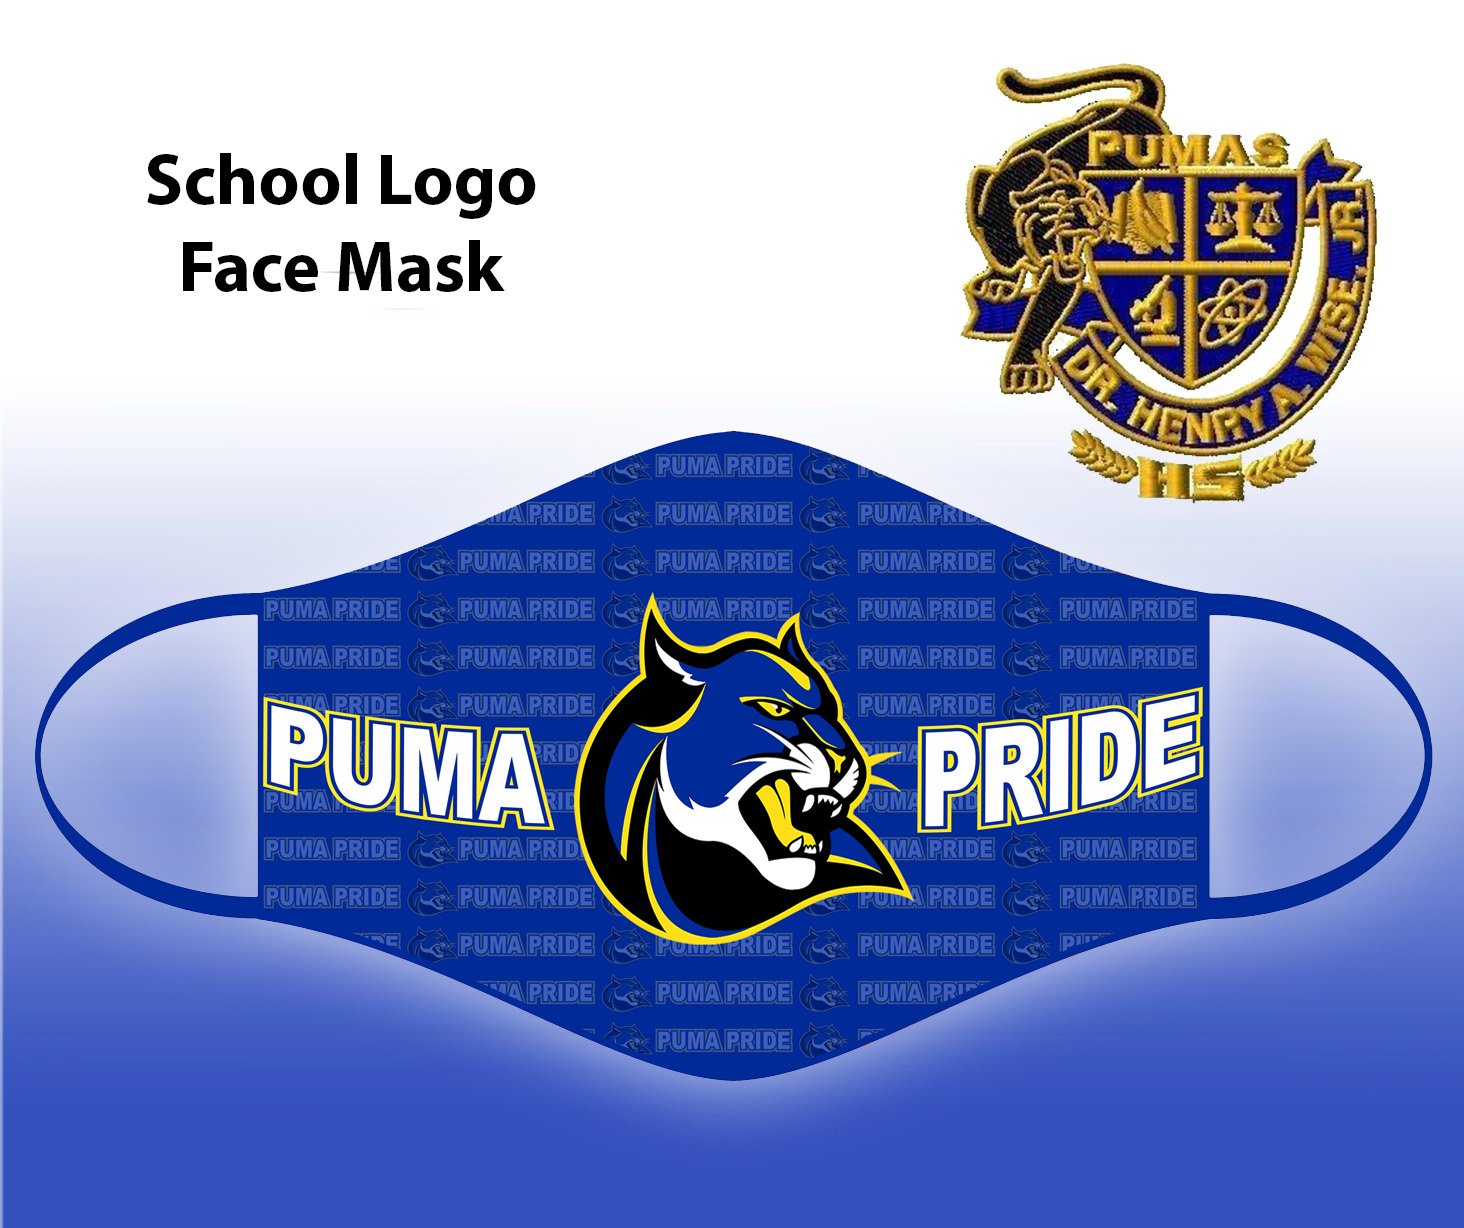 Image of School Logo Face Mask